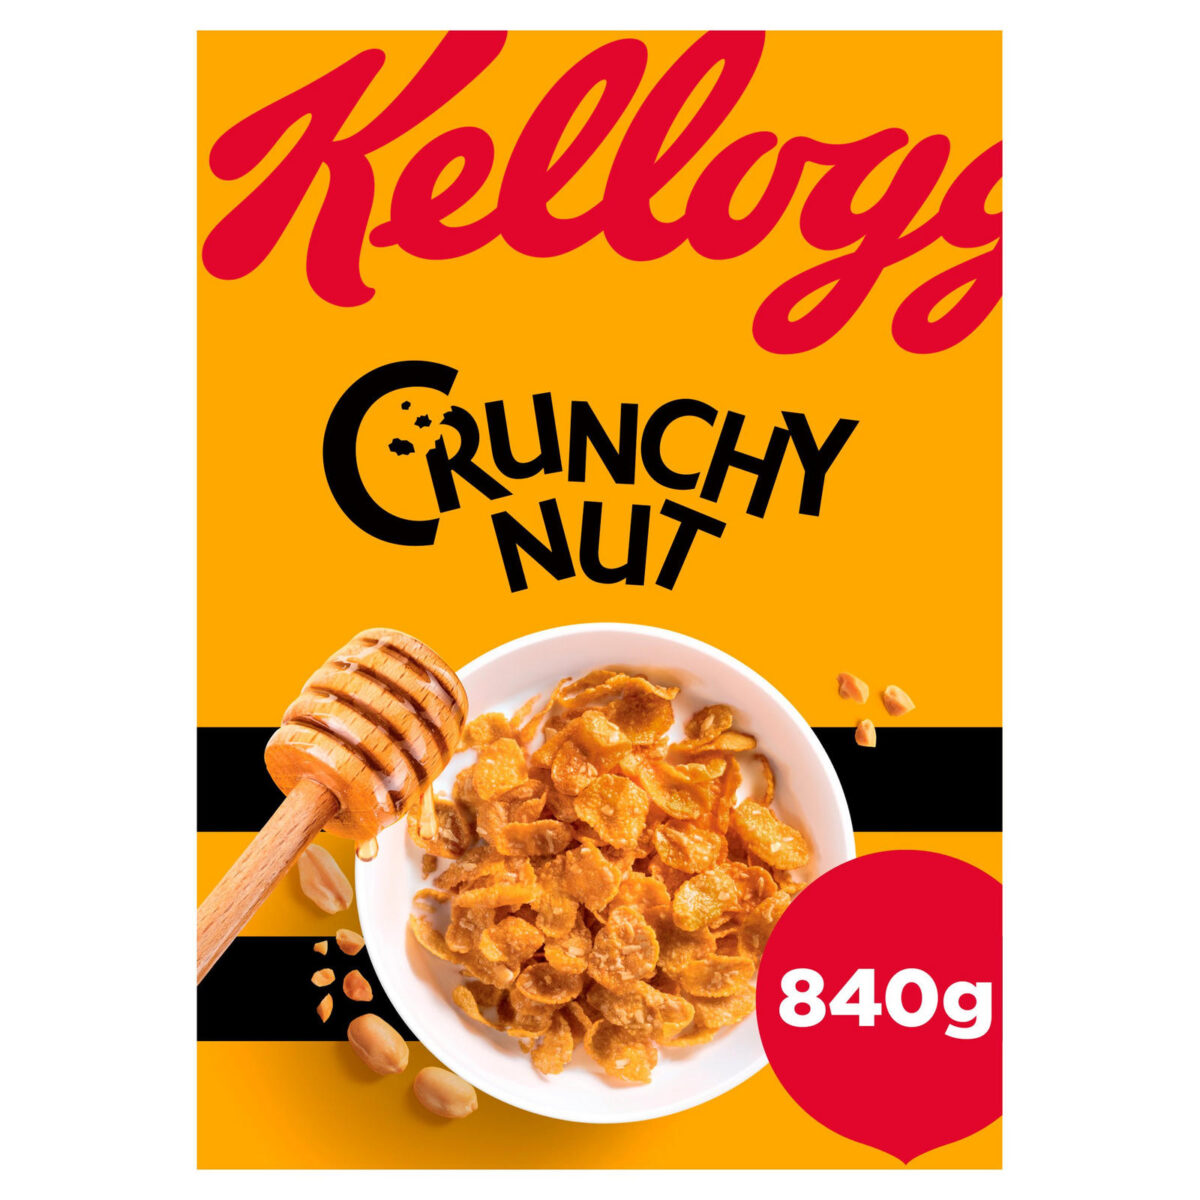 Kellogg's Crunchy Nut Original Cereal 840g